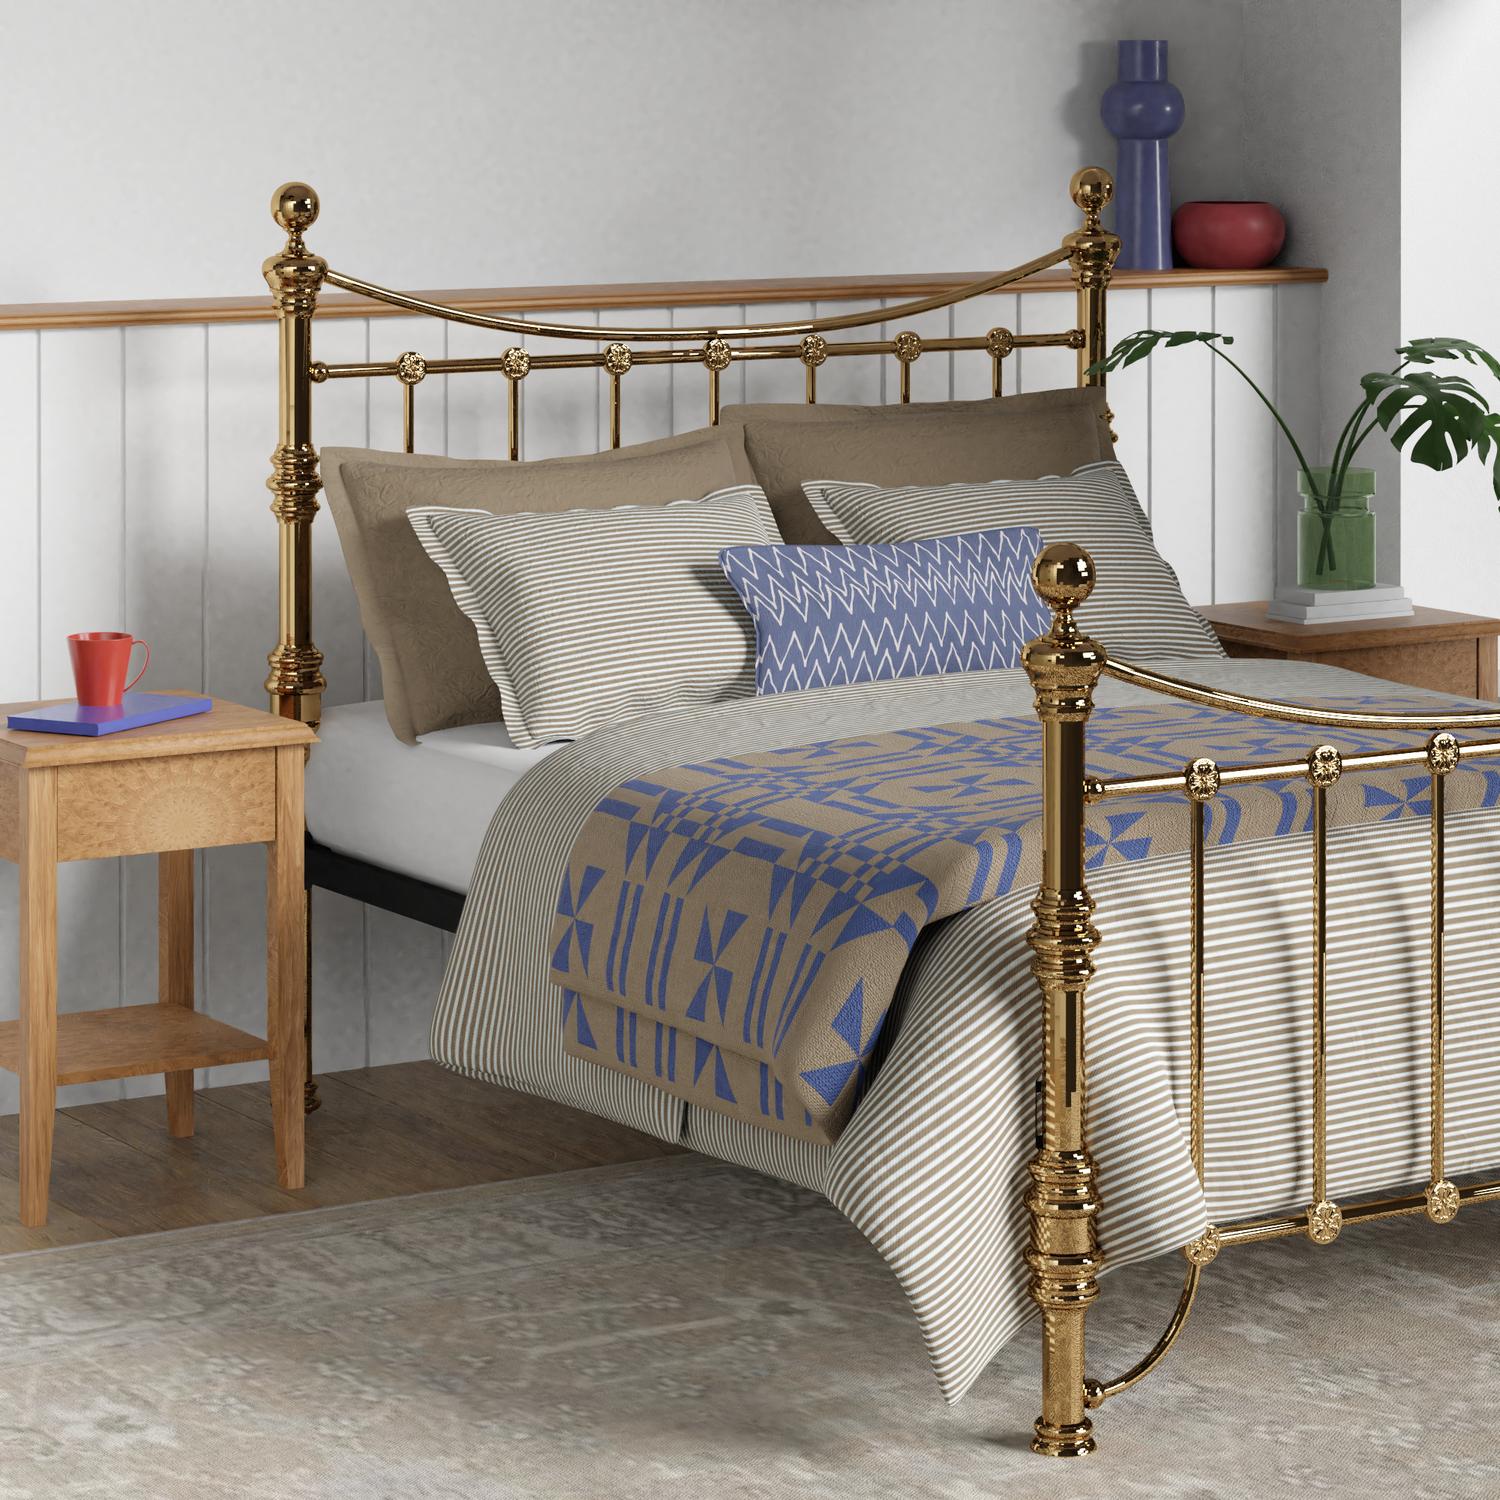 Arran brass bed - Image 6